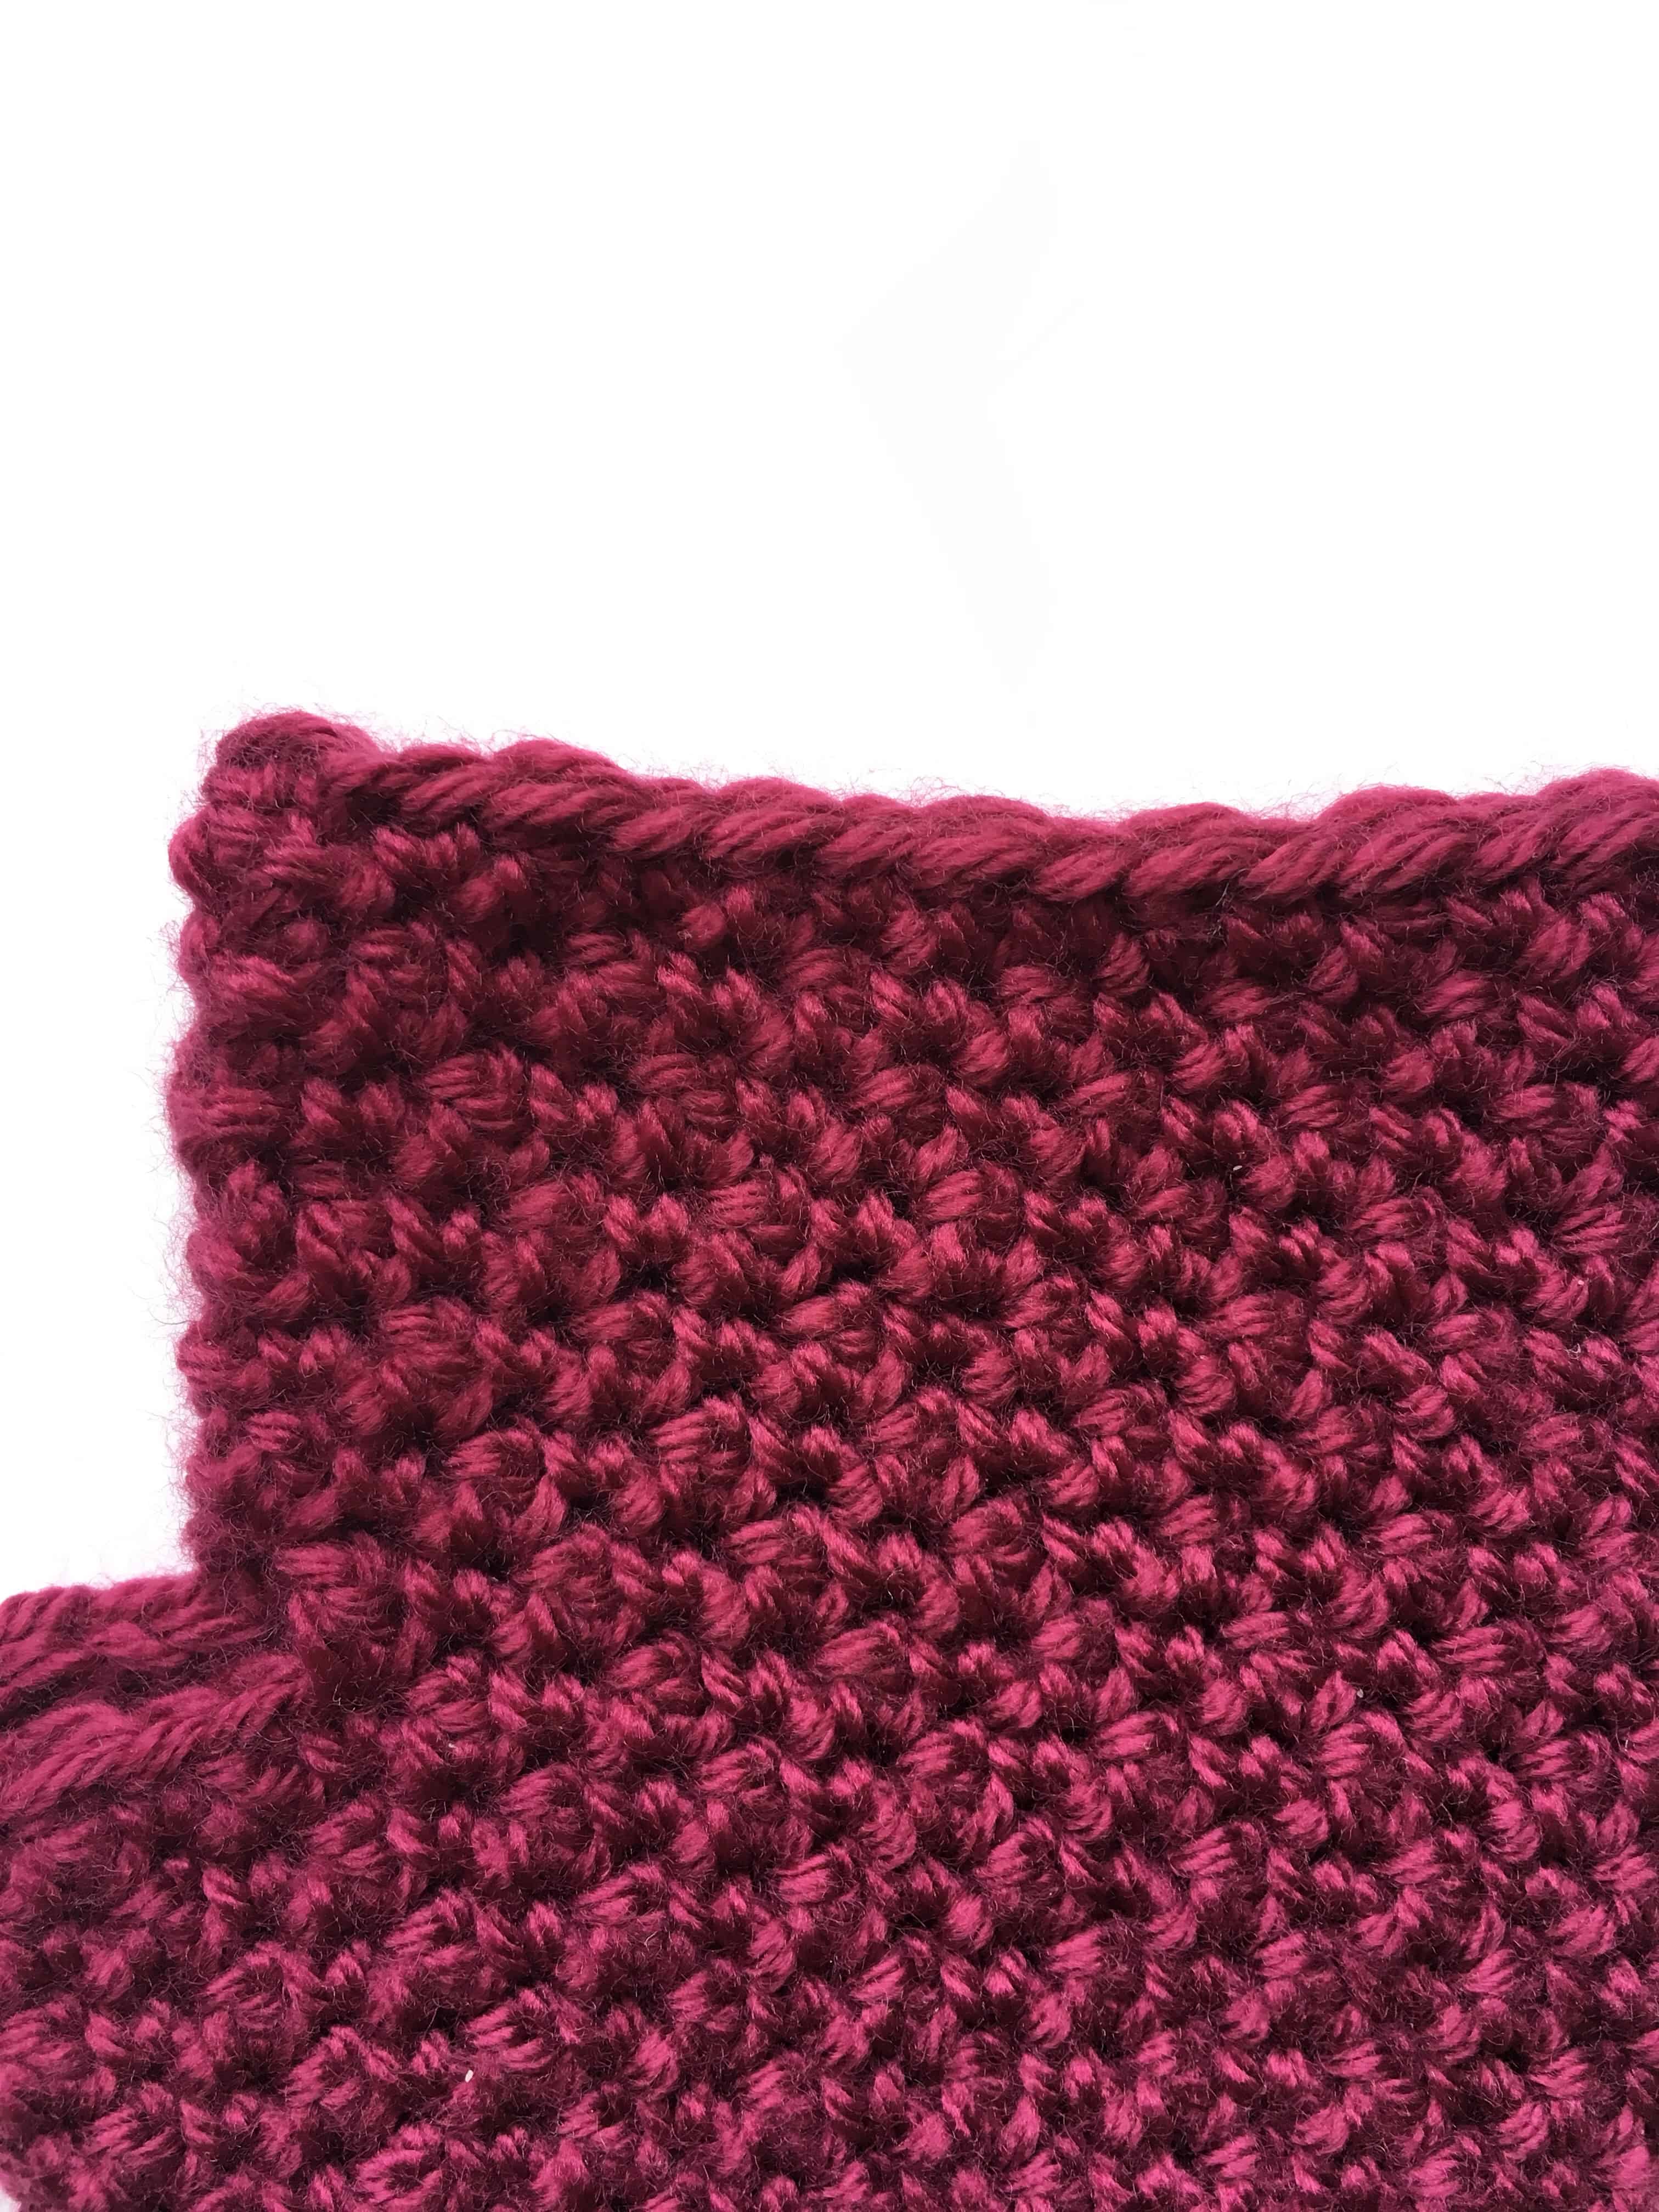 Free crochet mittens pattern